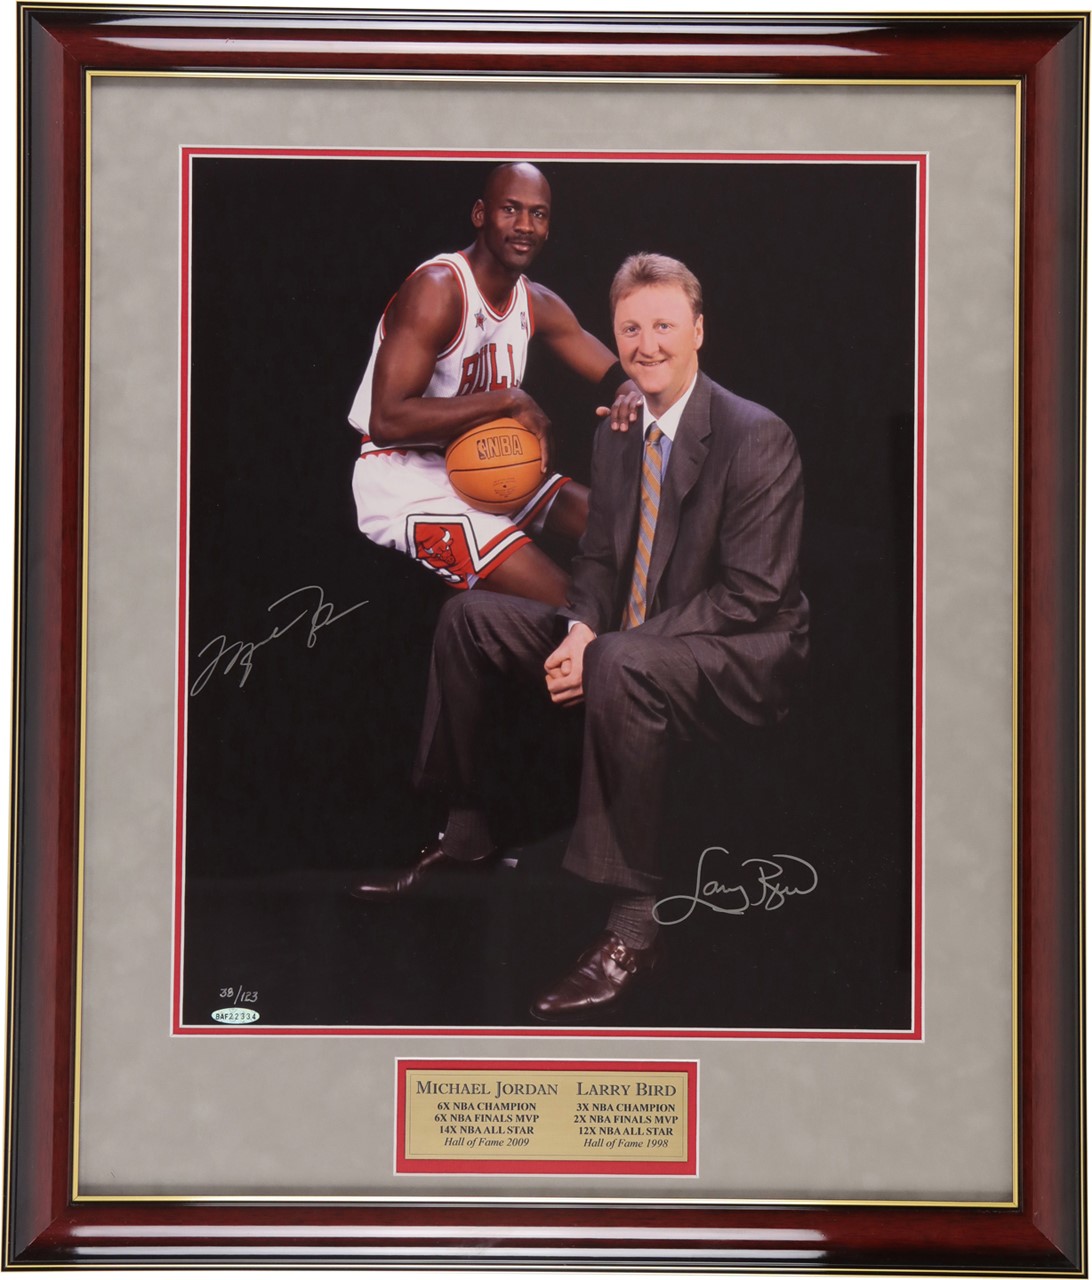 Michael Jordan and Larry Bird Signed Photograph 38/123 (UDA)